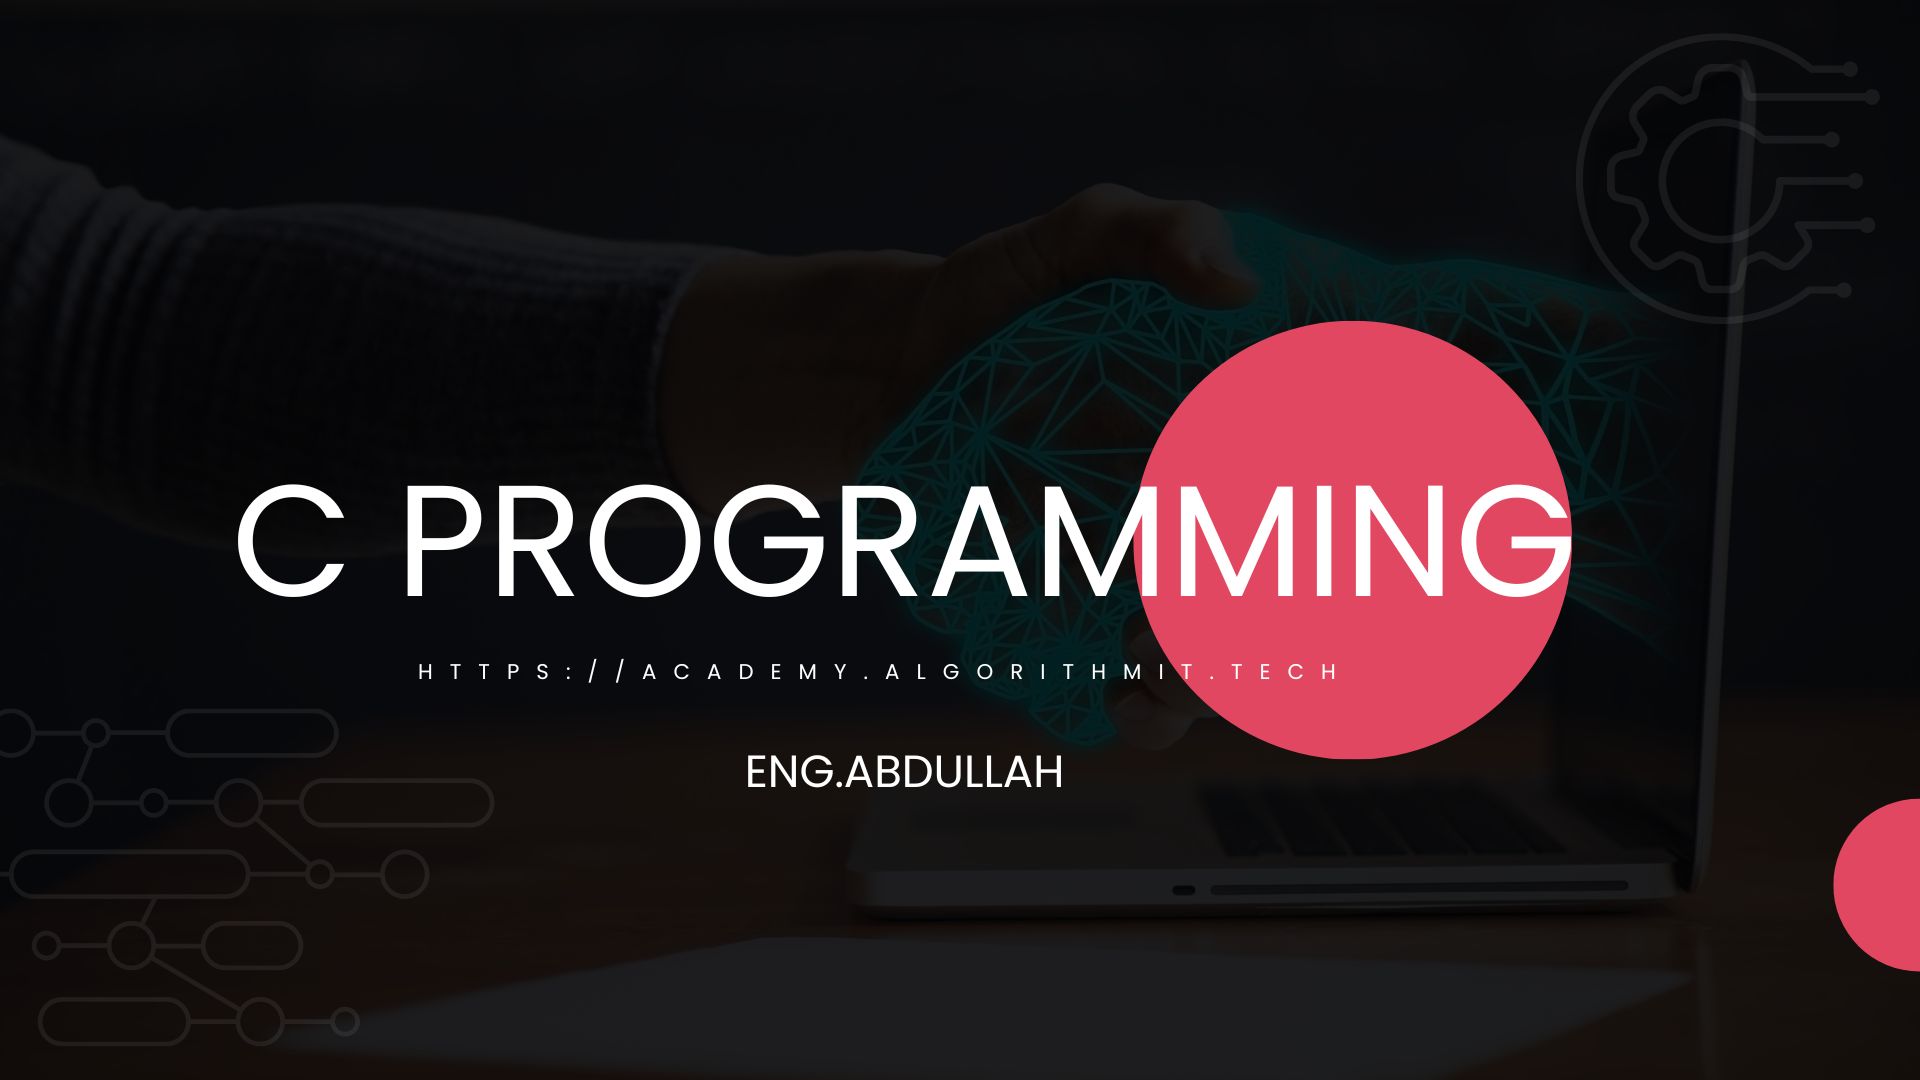 https://algorithmit.tech/layout/images/uploads/courses/c-programming-for-beginners.jpg